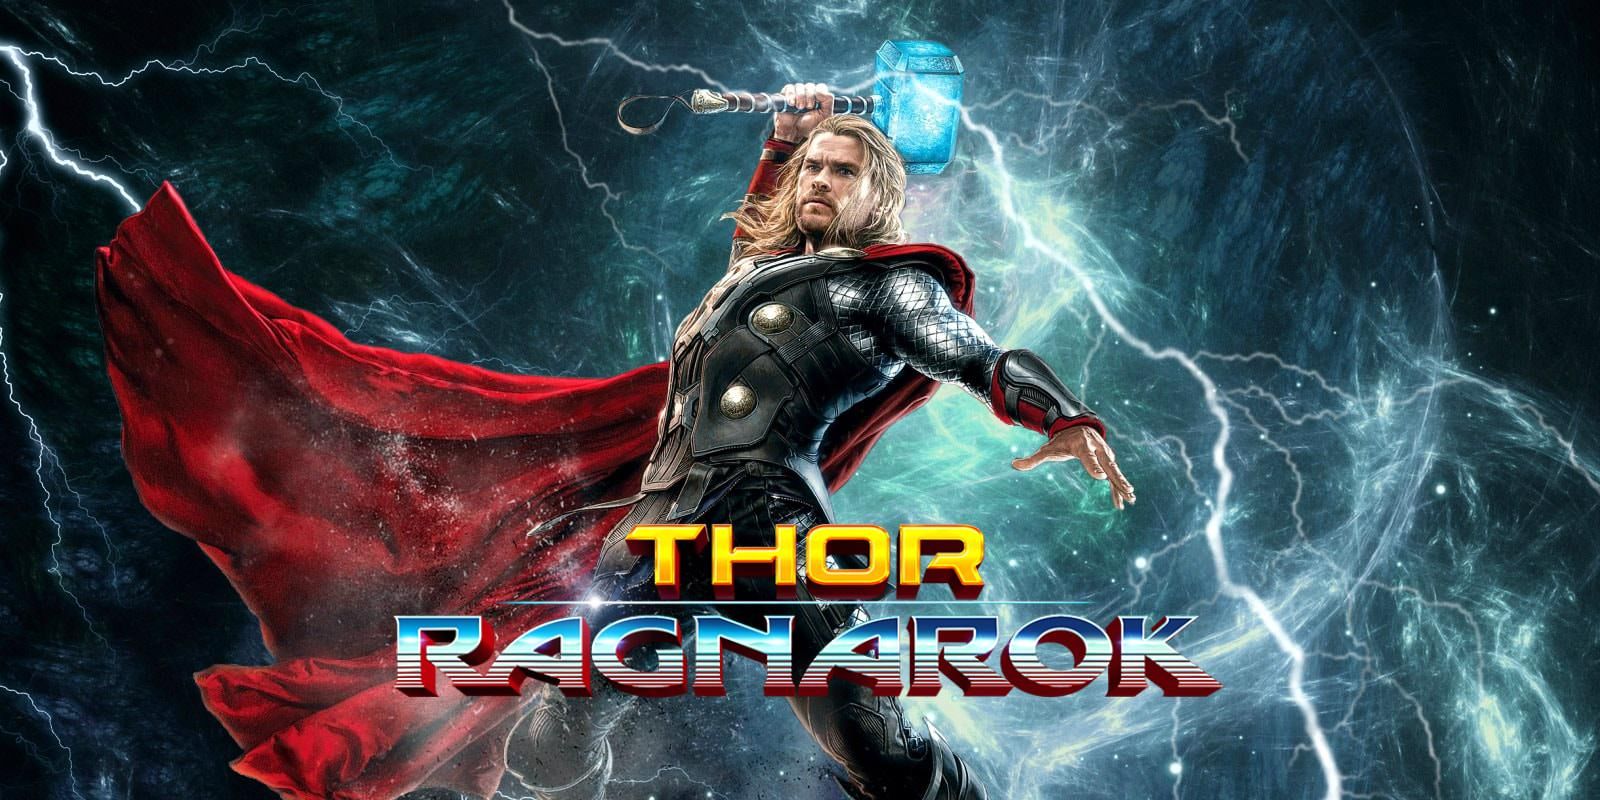 Best Thor Ragnarok Wallpaper For PC And Smartphones